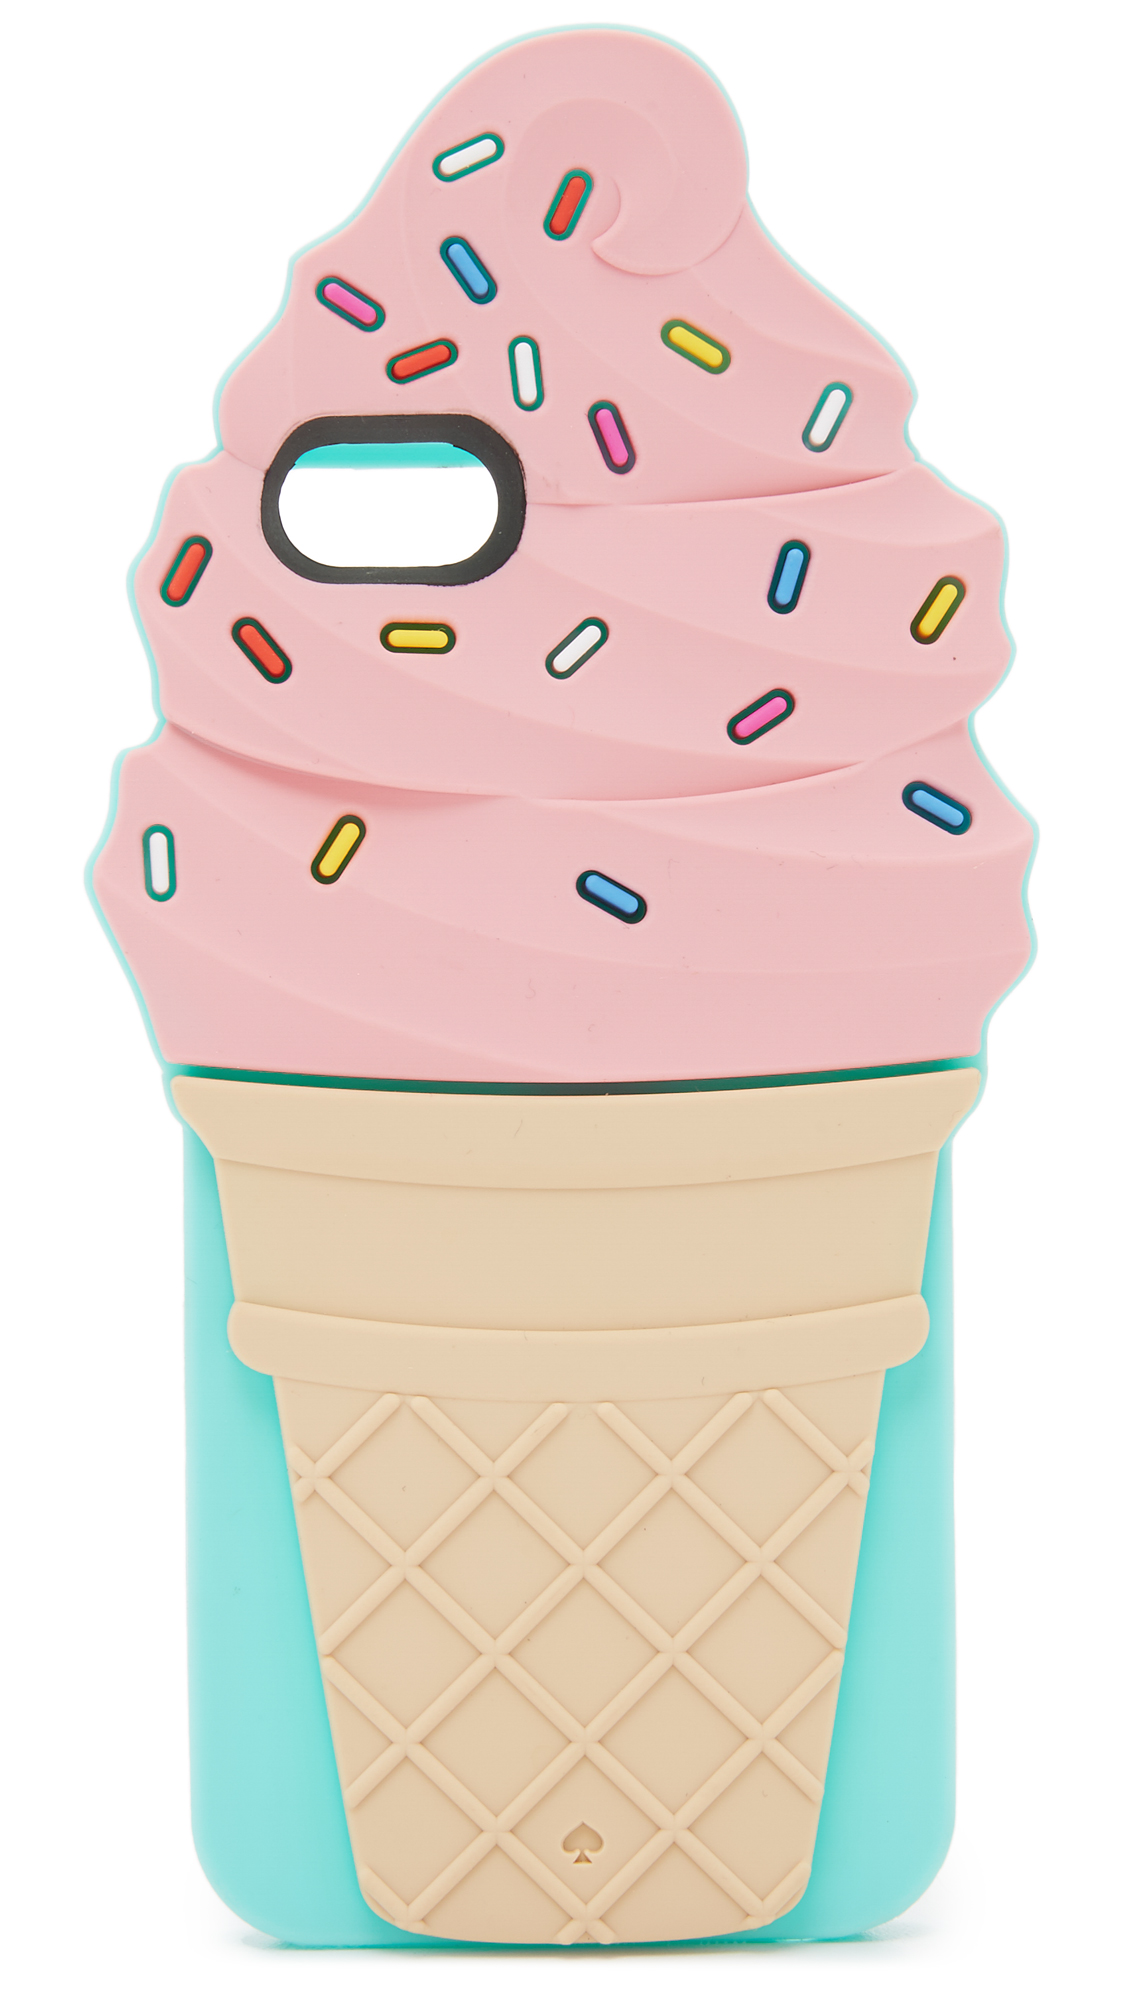 Kate Spade New York Ice Cream Cone iPhone 6 / 6s Case.